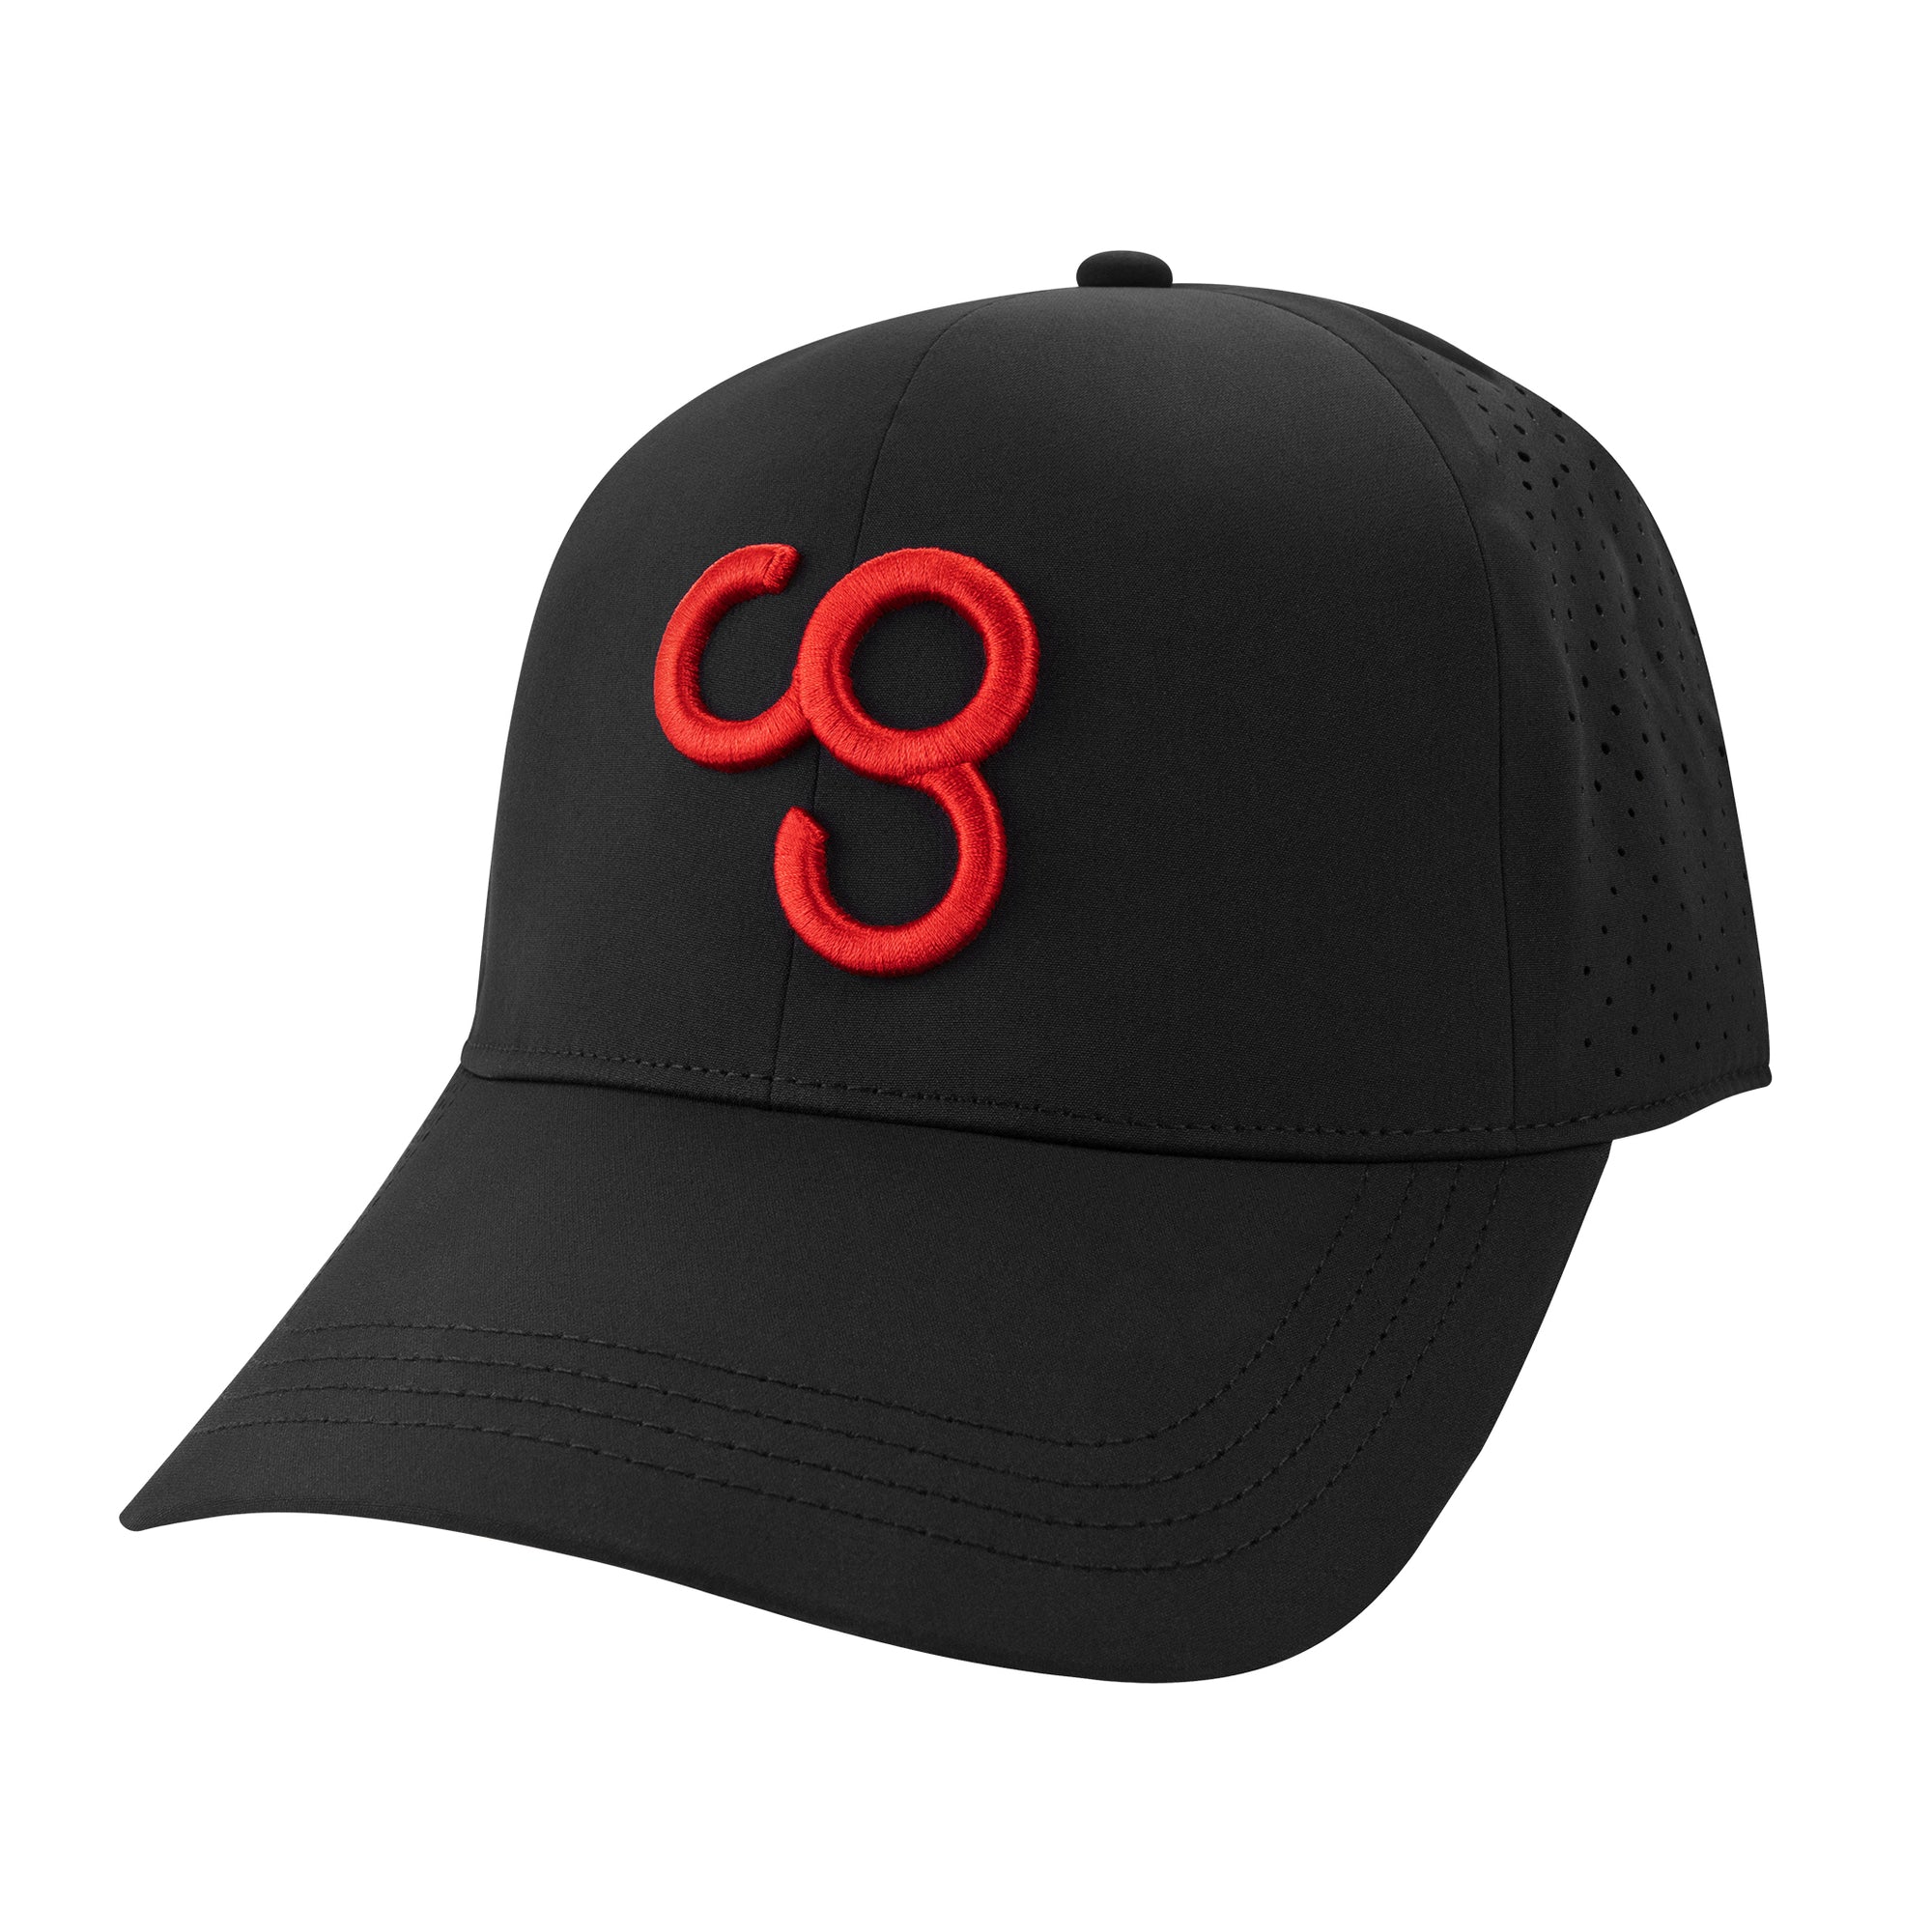 CG Performance Hat -Black/Red